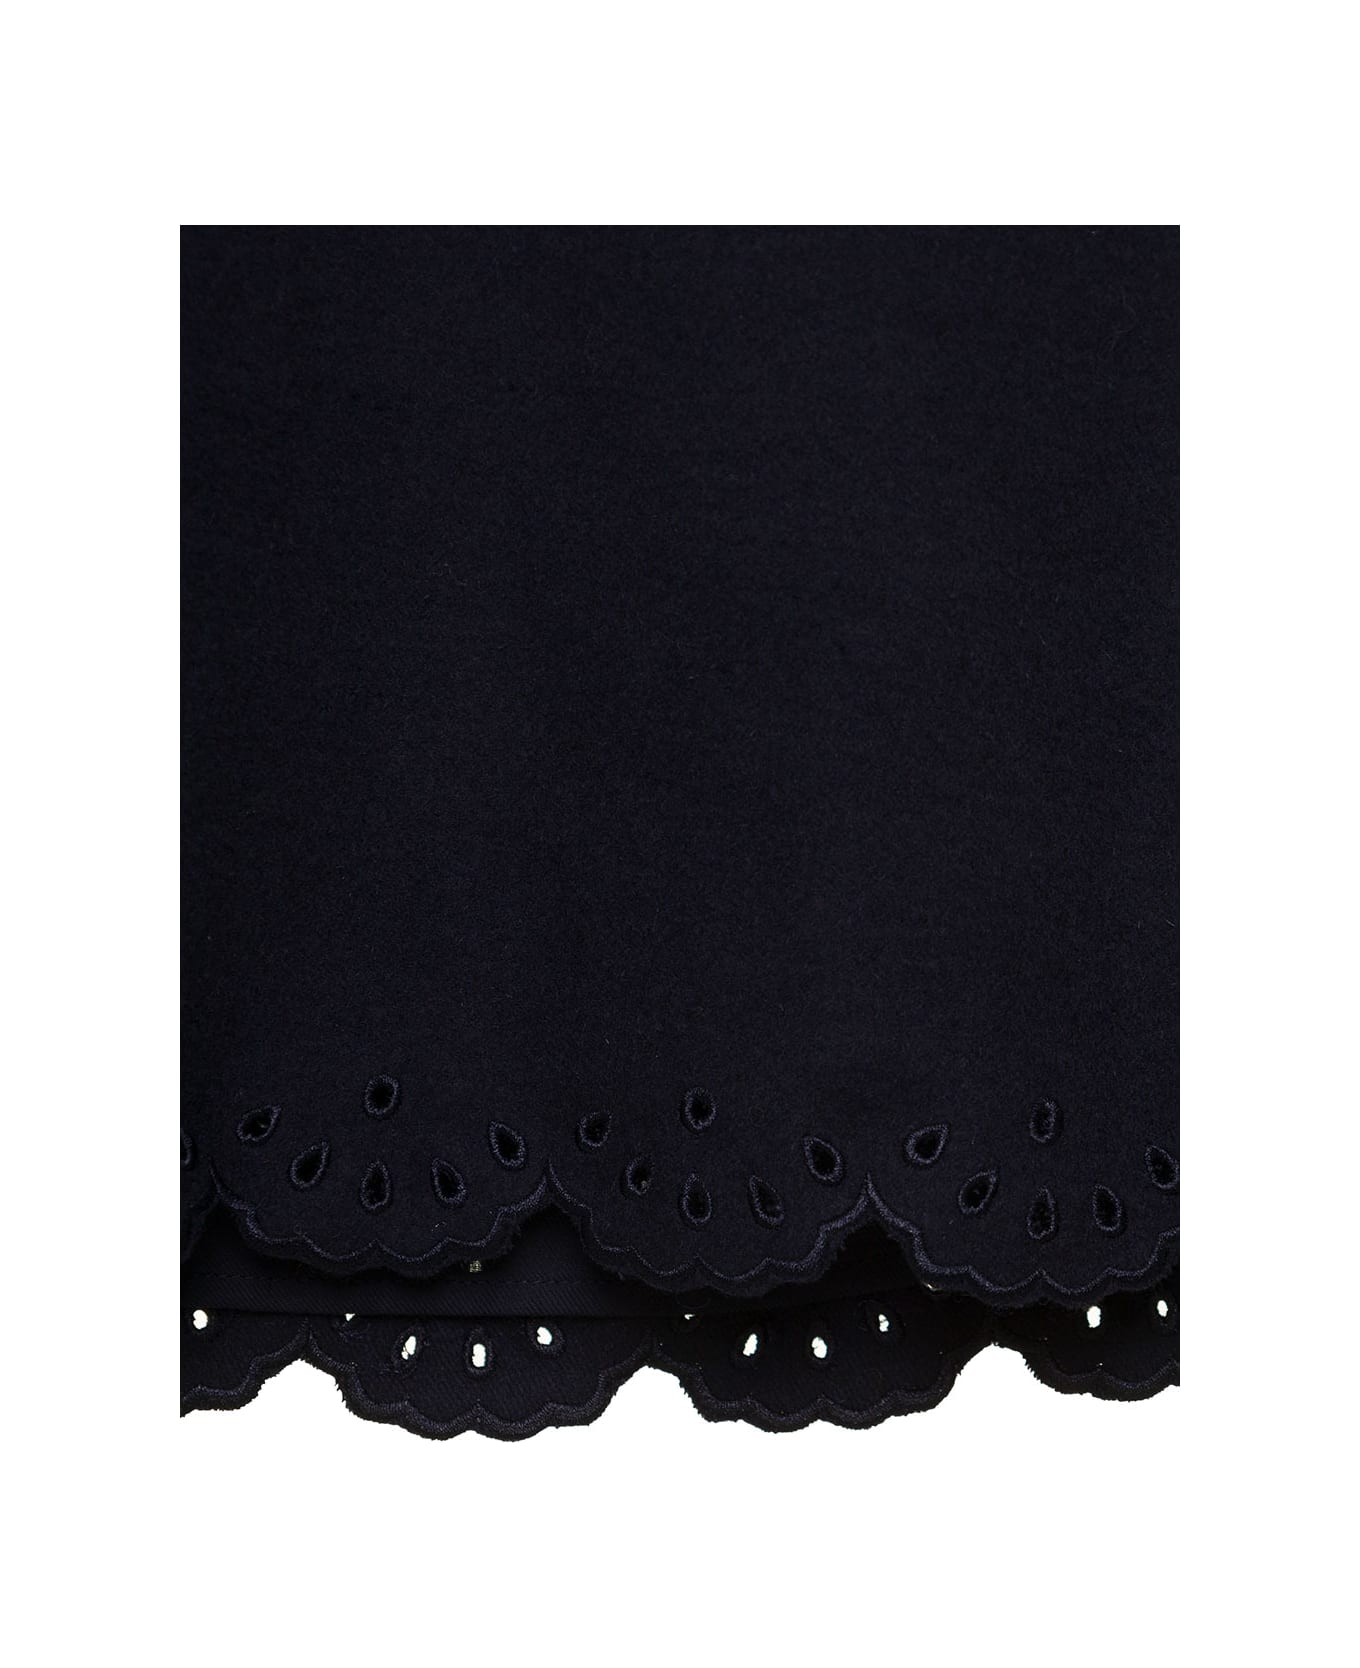 Chloé Kids Girl's Black Skirt With Flared Hem - Blu